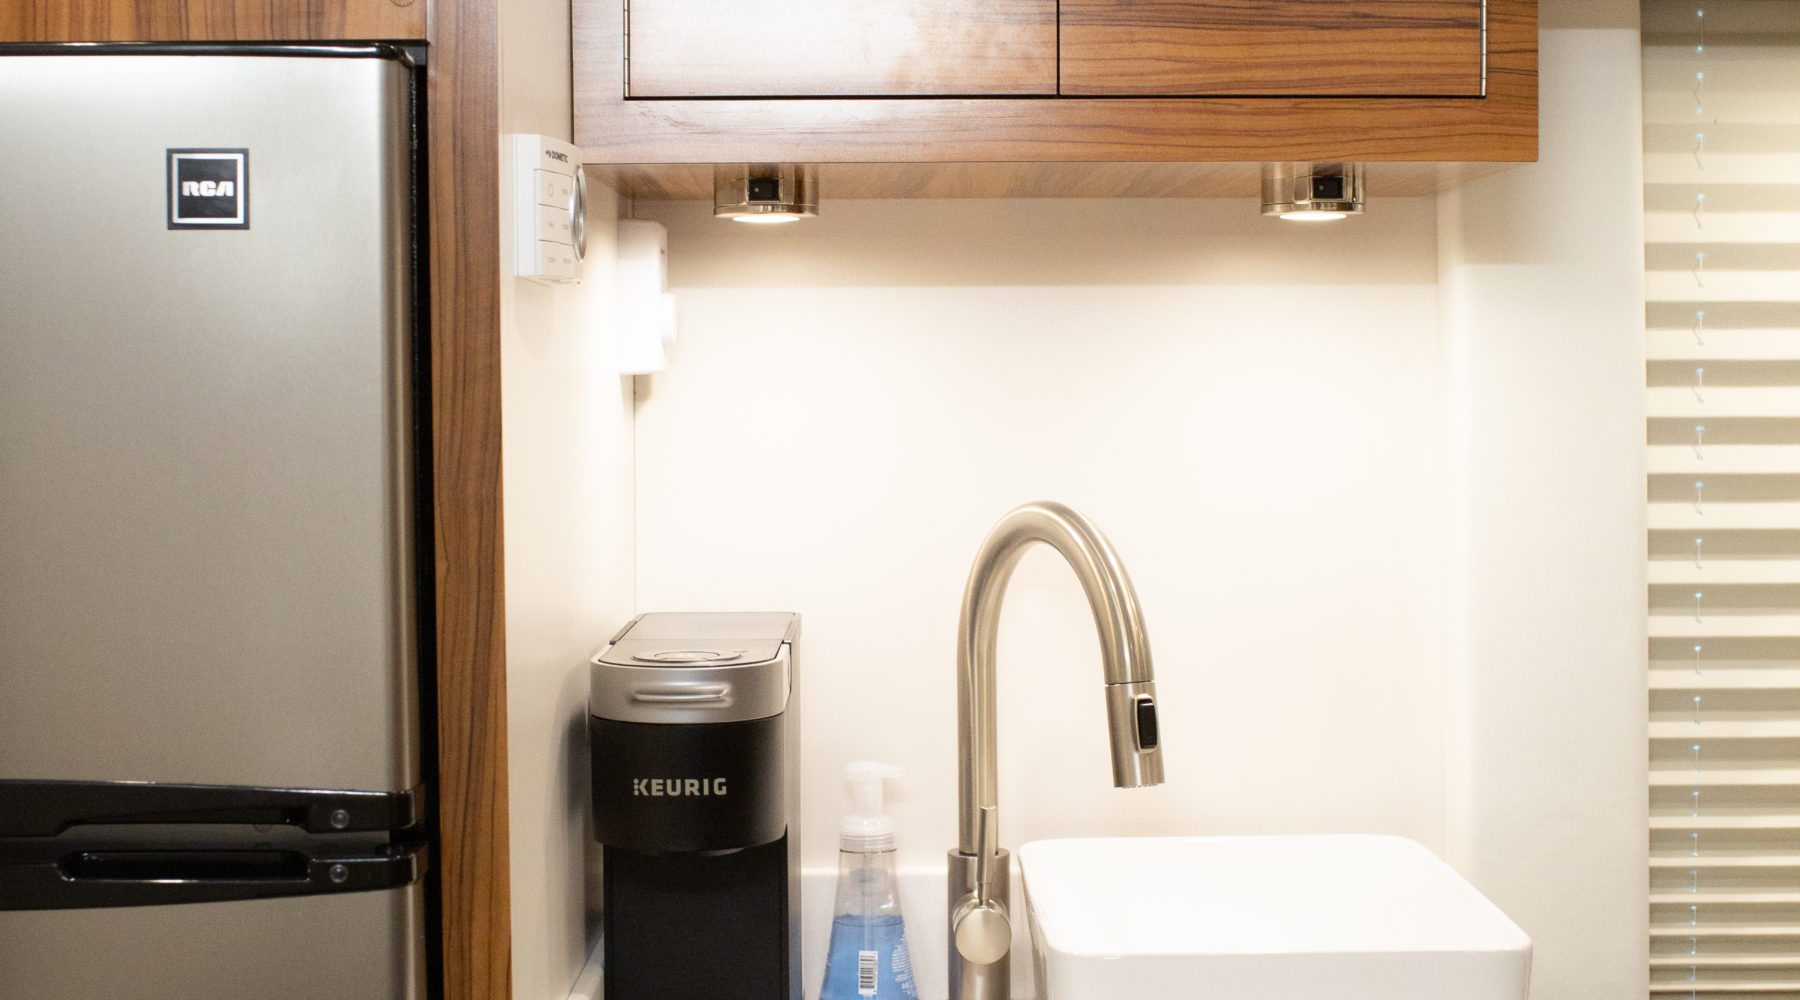 Streamliner Interior Kitchen Sink and Keurig Coffee Maker